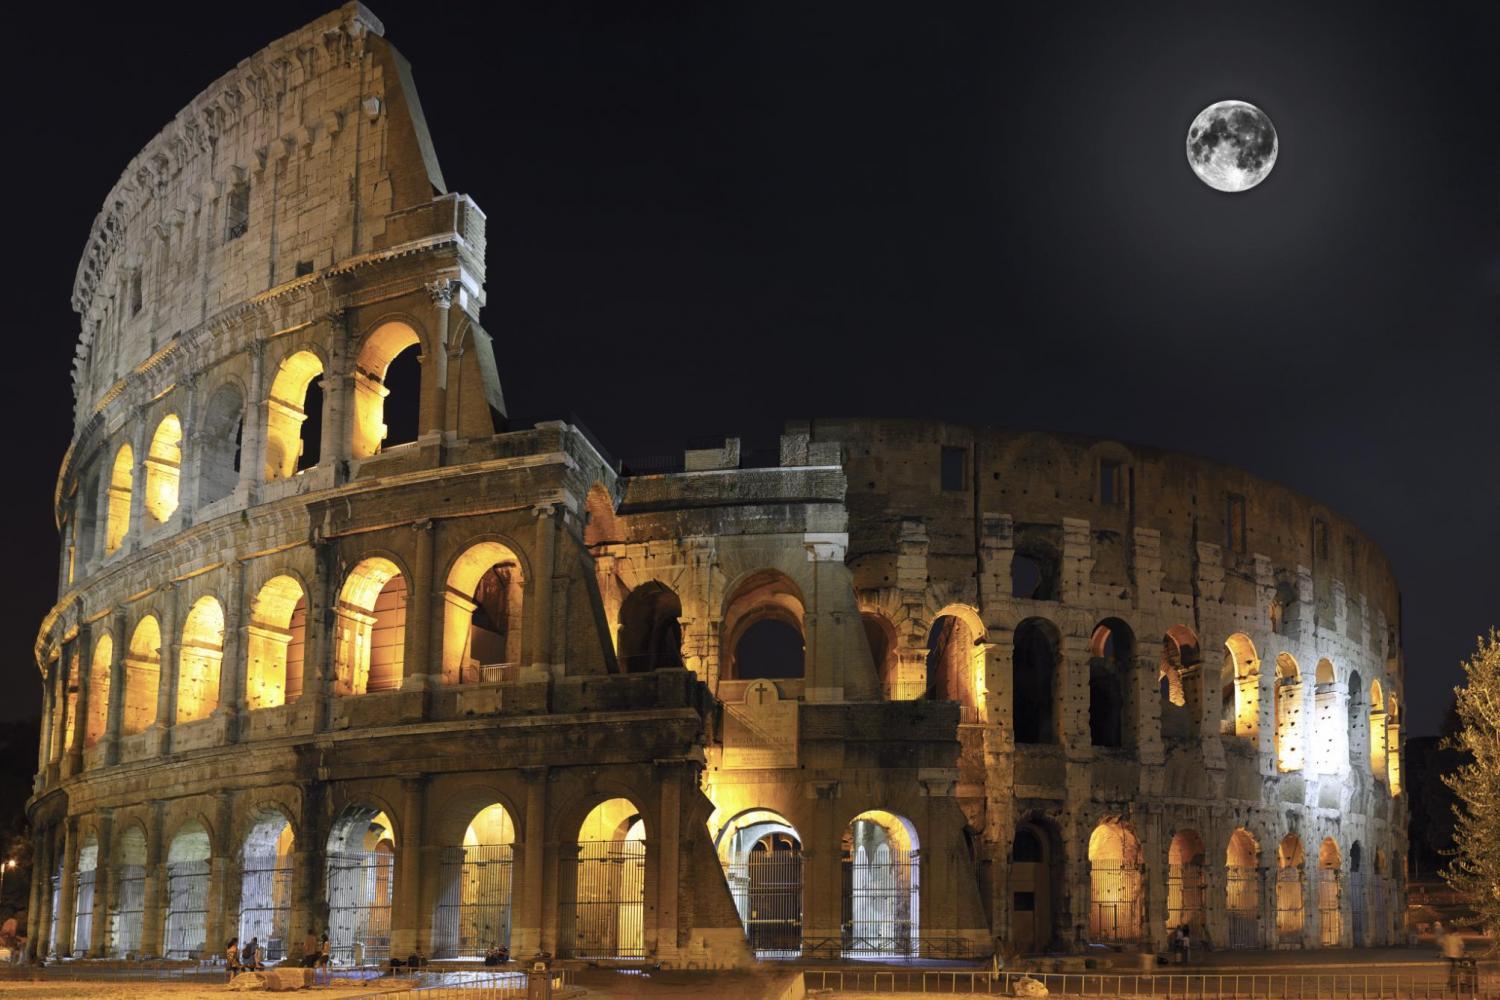 Skip the Line: Underground Colosseum Tour